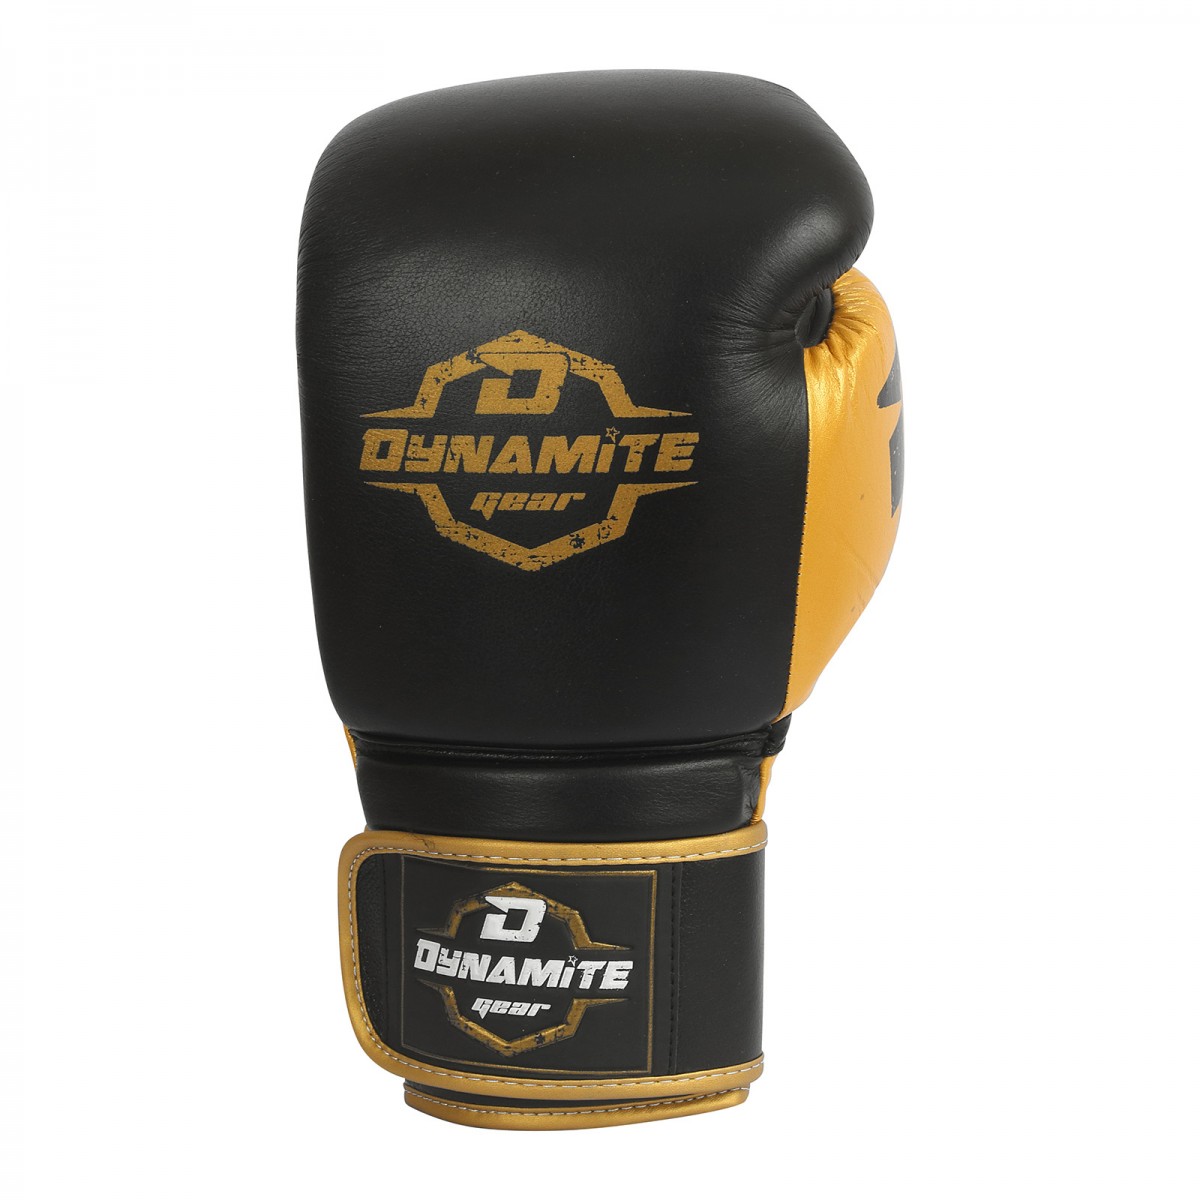 Dynamite Kickboxing Boxing Gloves - Genuine Leather 16 OZ